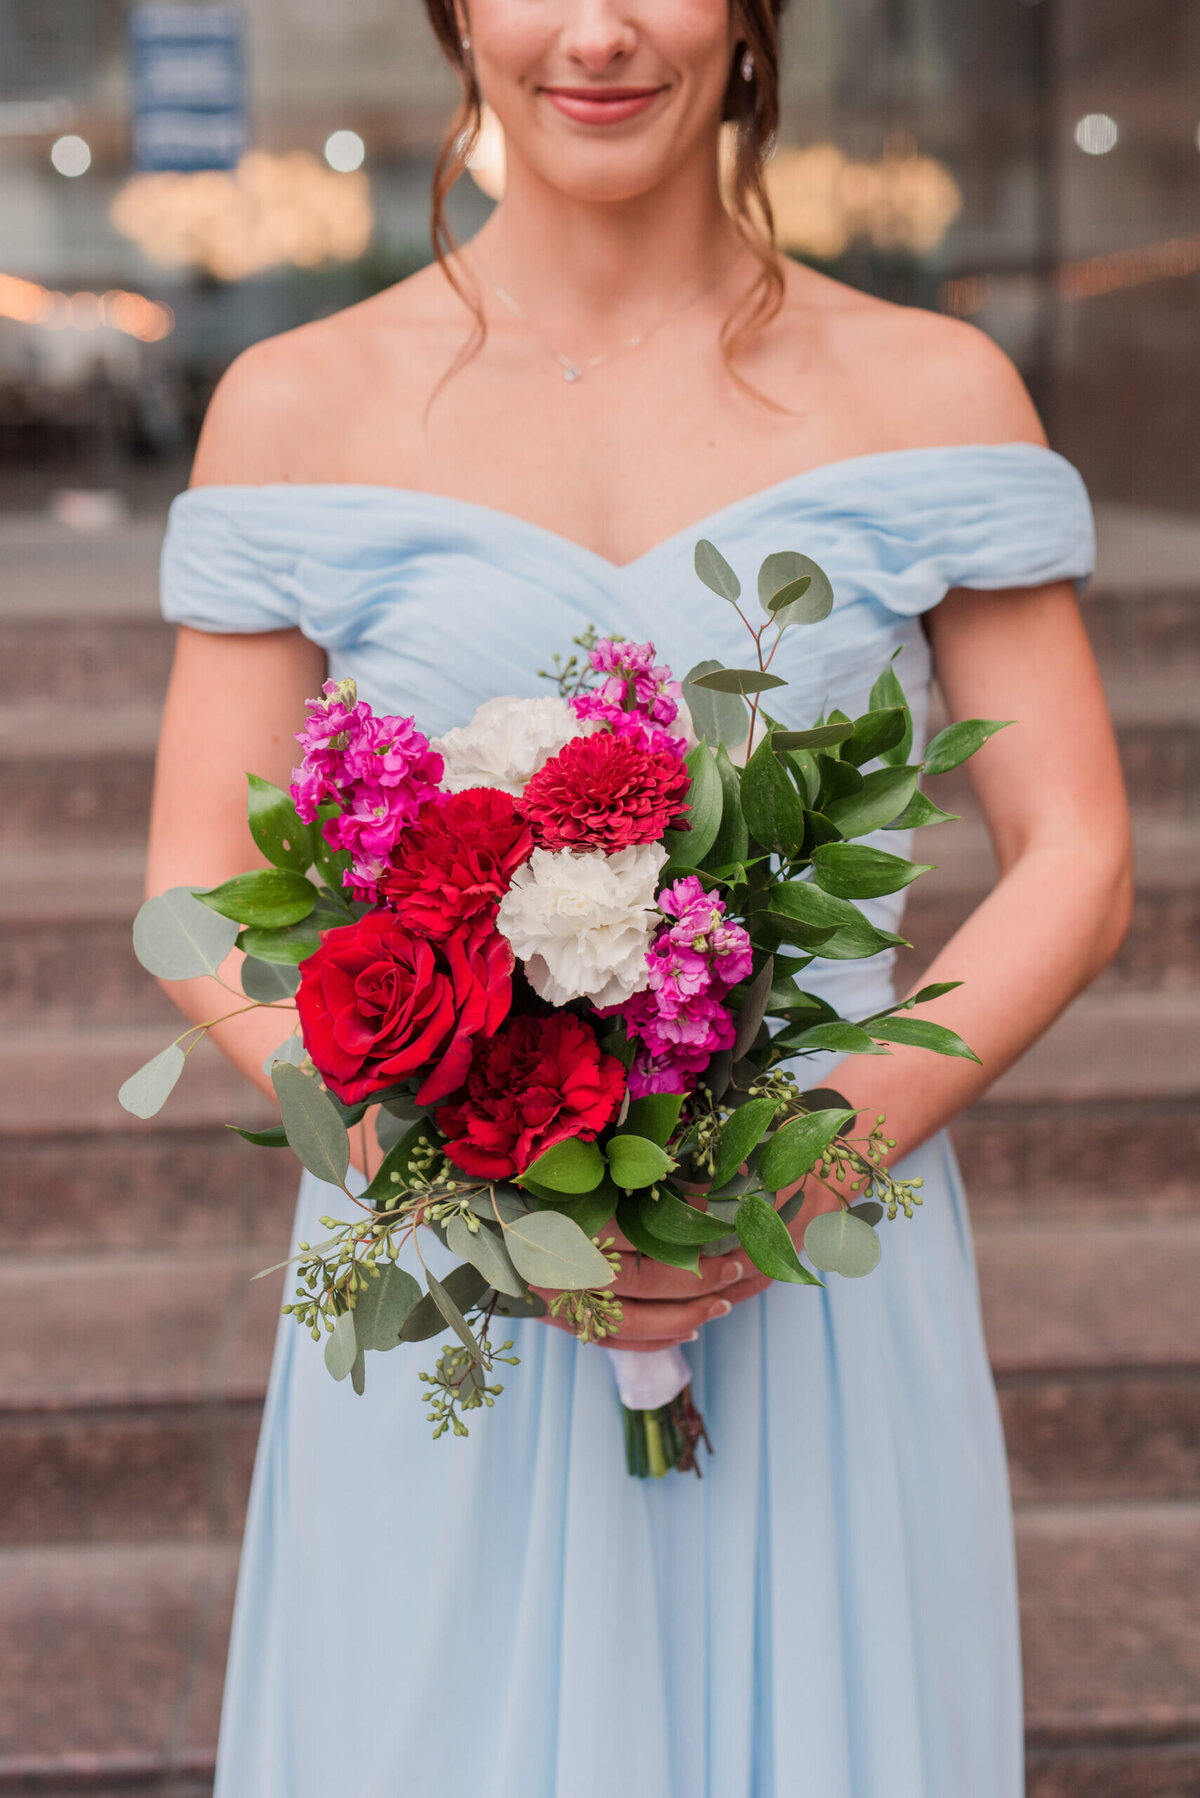 adriana_texas-old-town-austin-wedding-florist-38-scaled